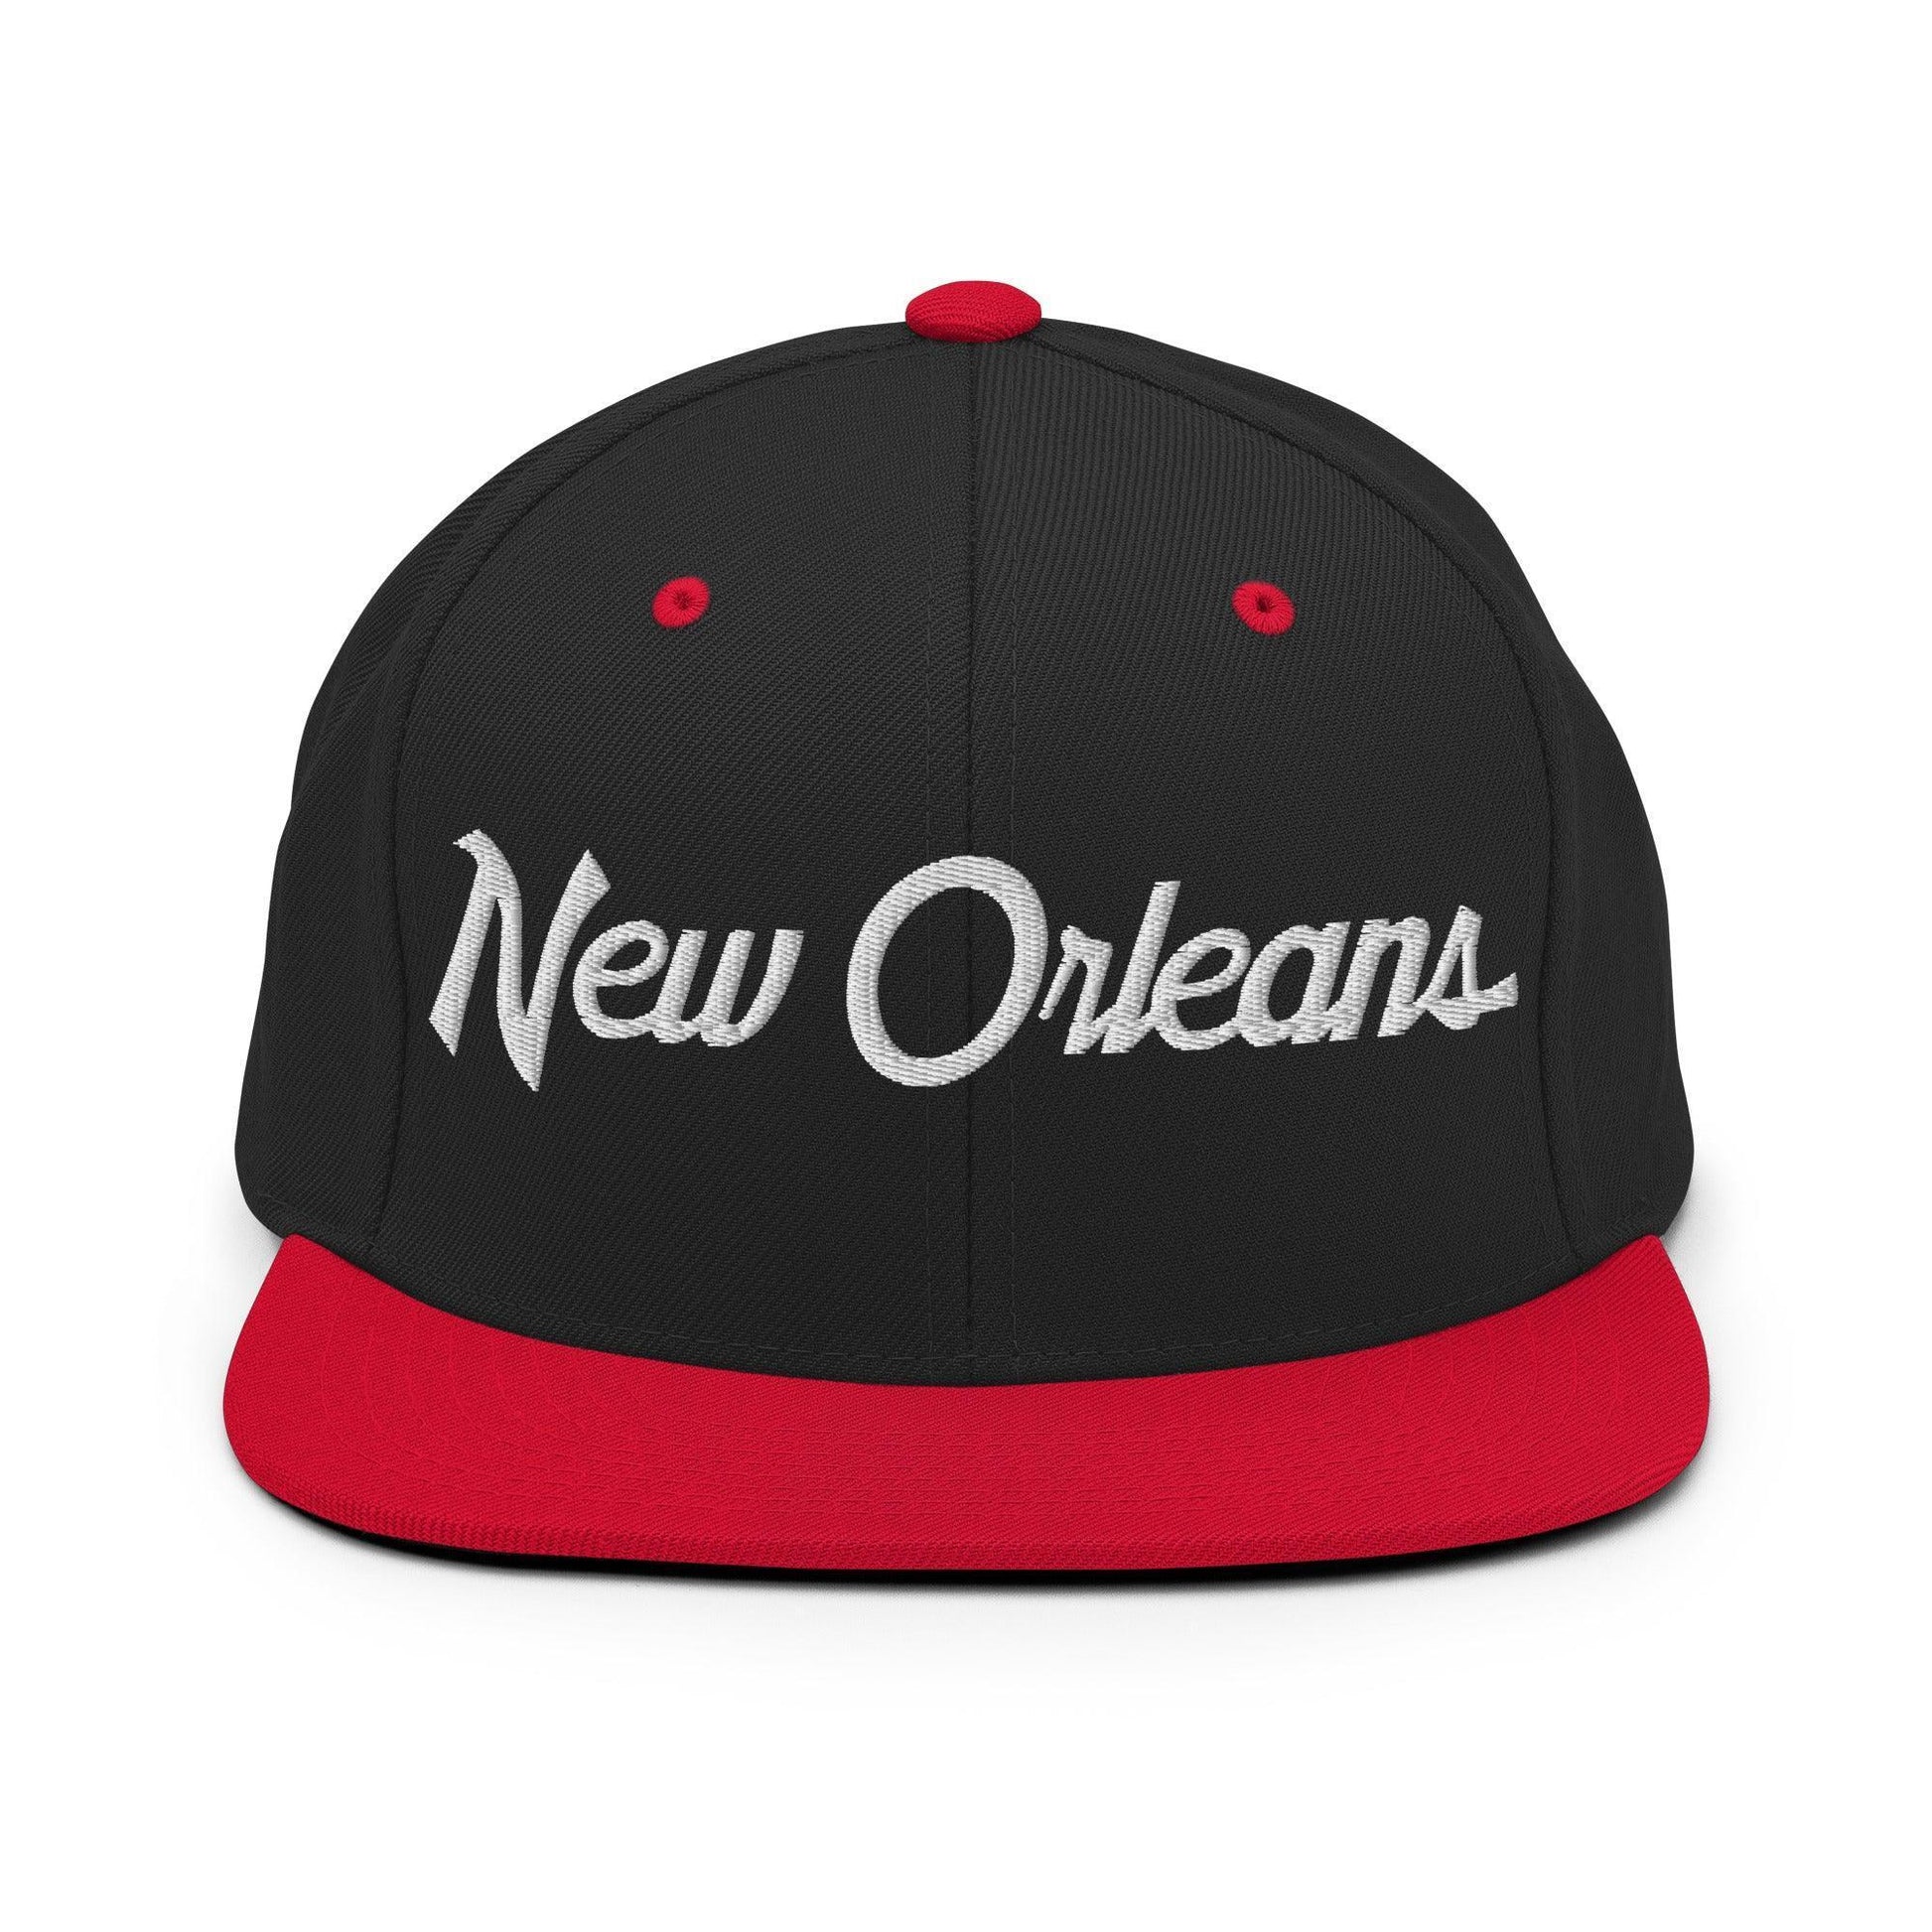 New Orleans Script Snapback Hat Black/ Red